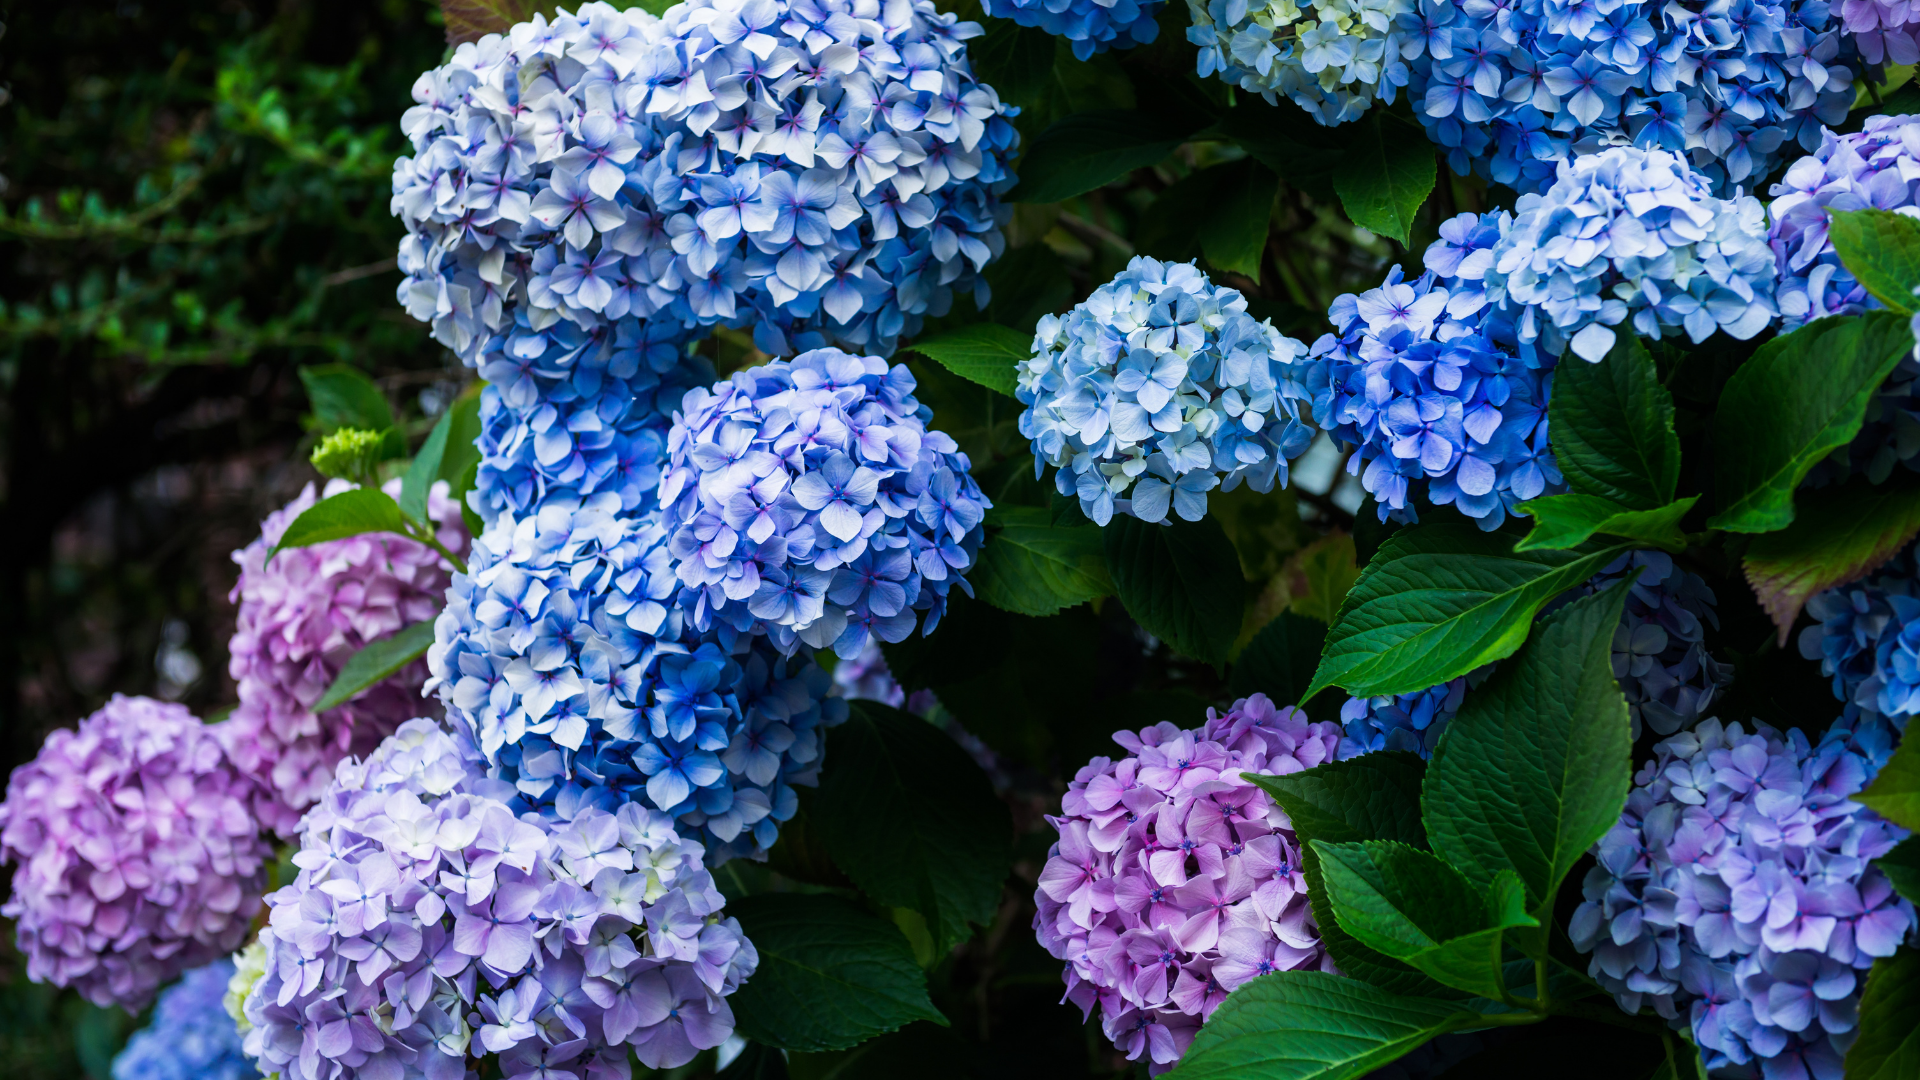 blue, pink and purple hydrangeas.